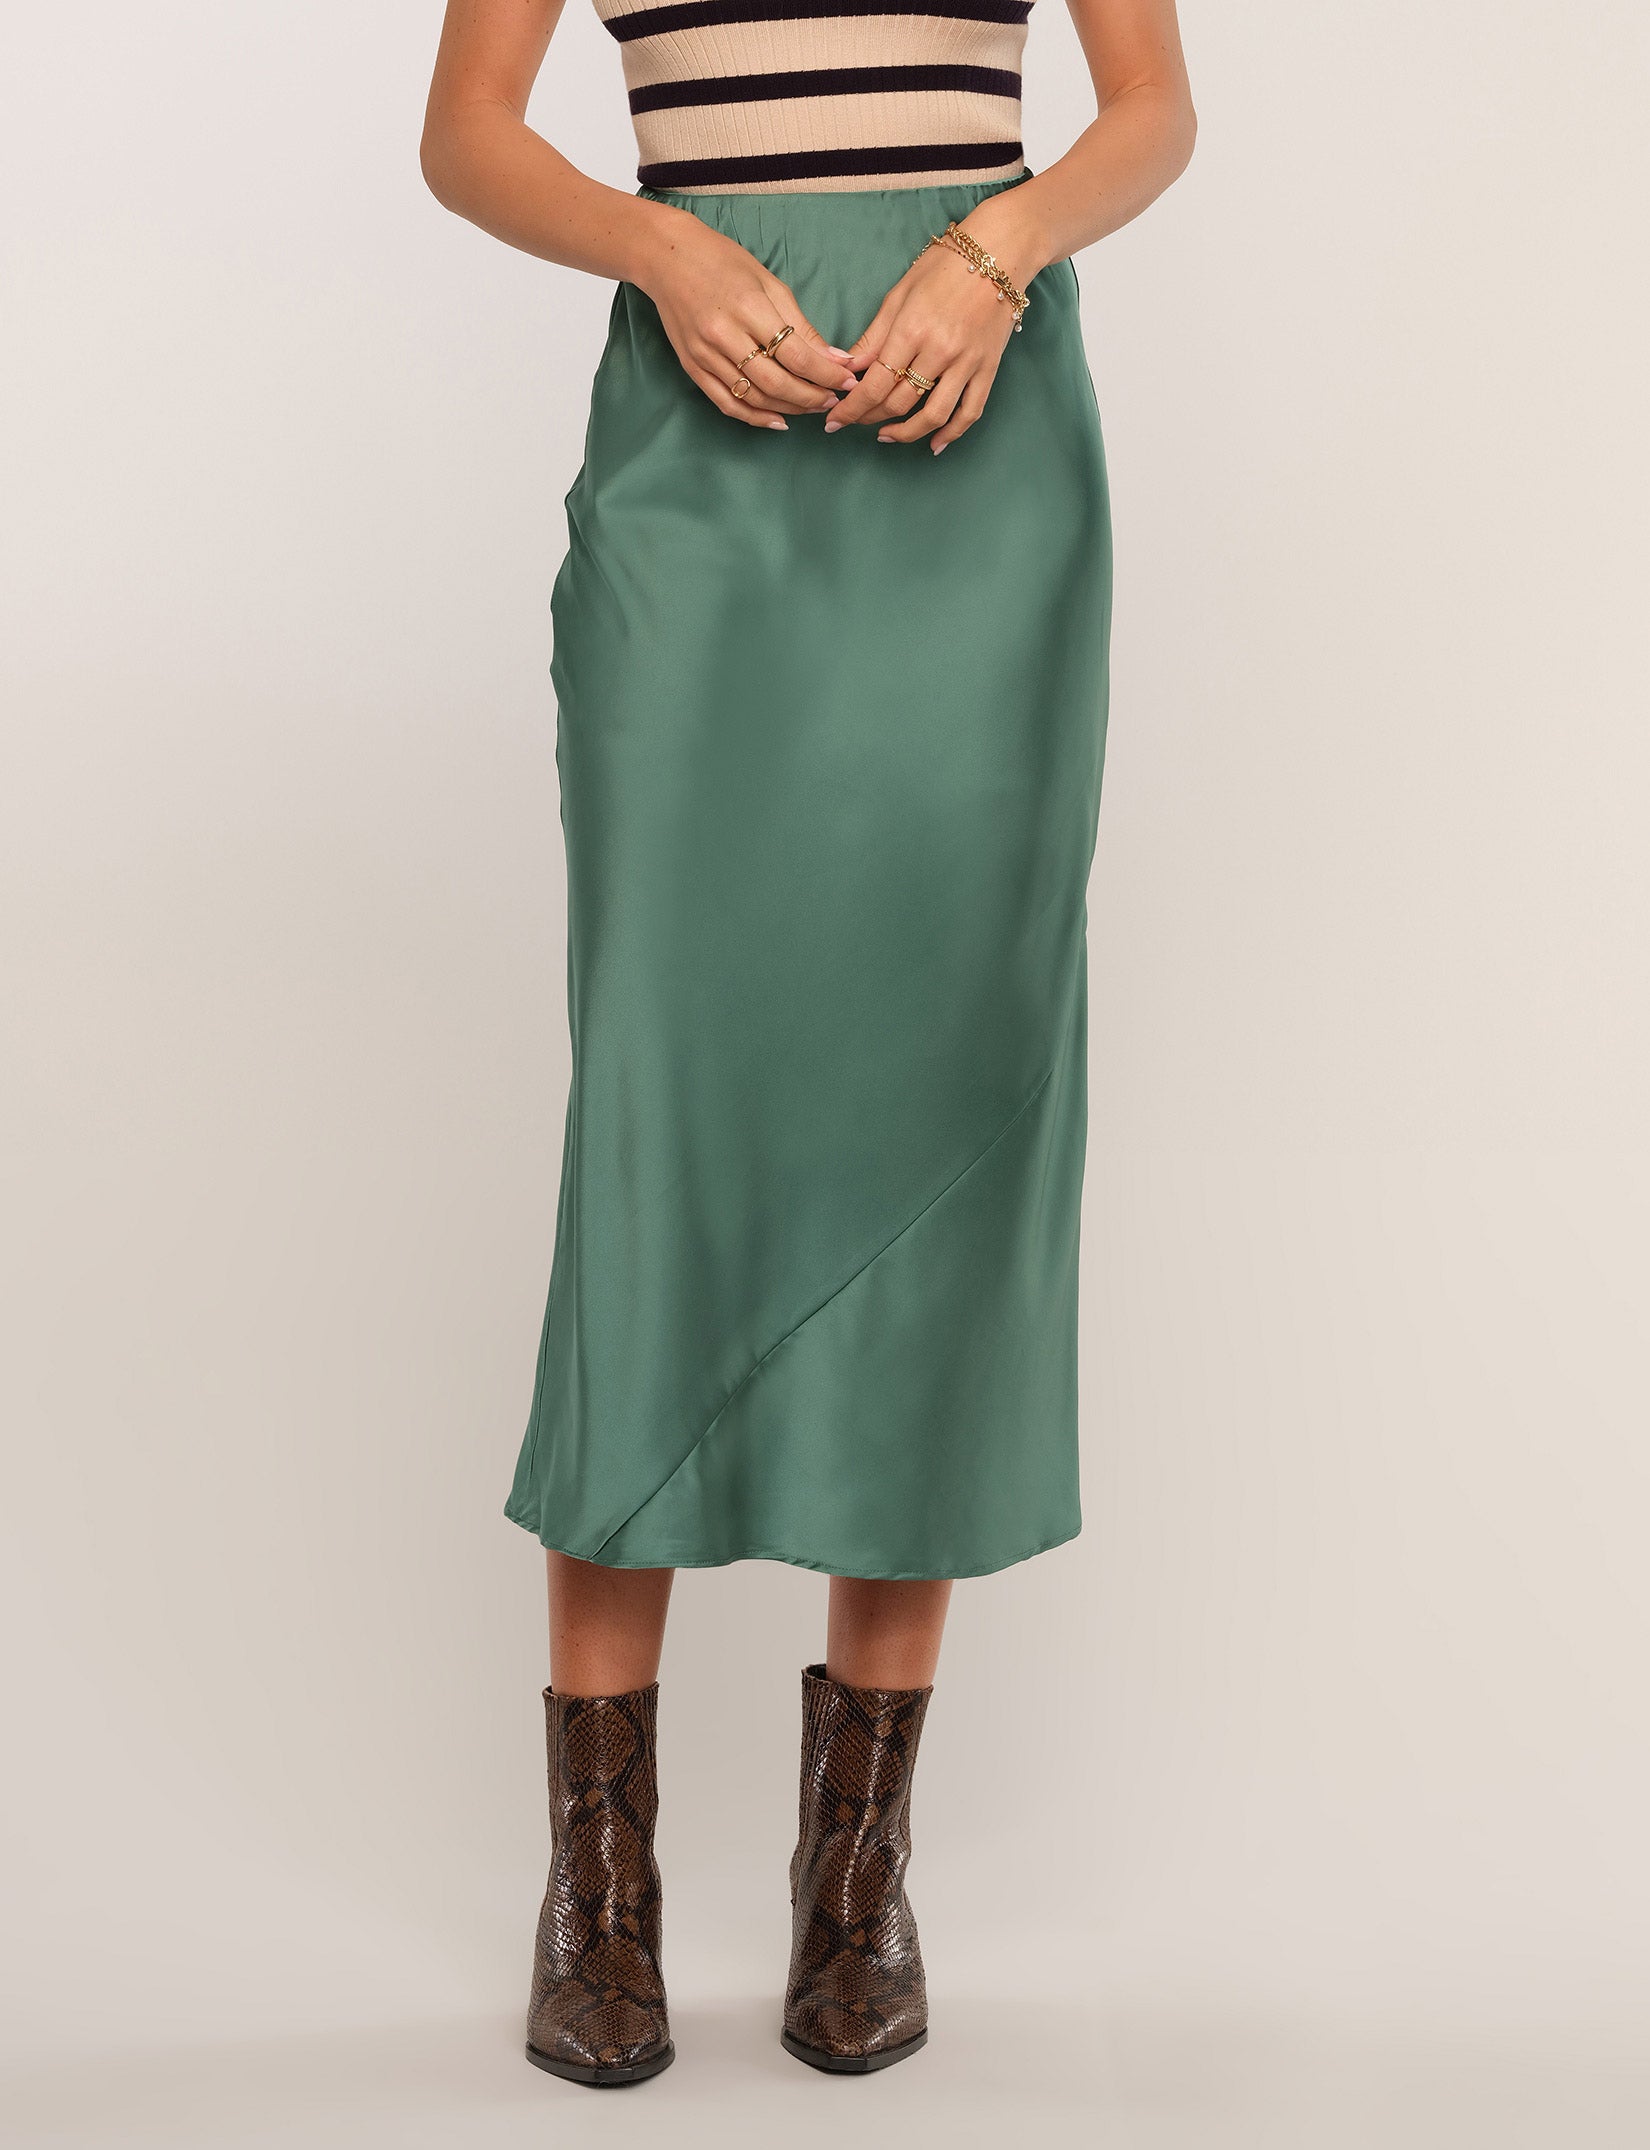 Heartloom, Sheridan Bias Cut Midi Skirt in Grass - Boutique Dandelion